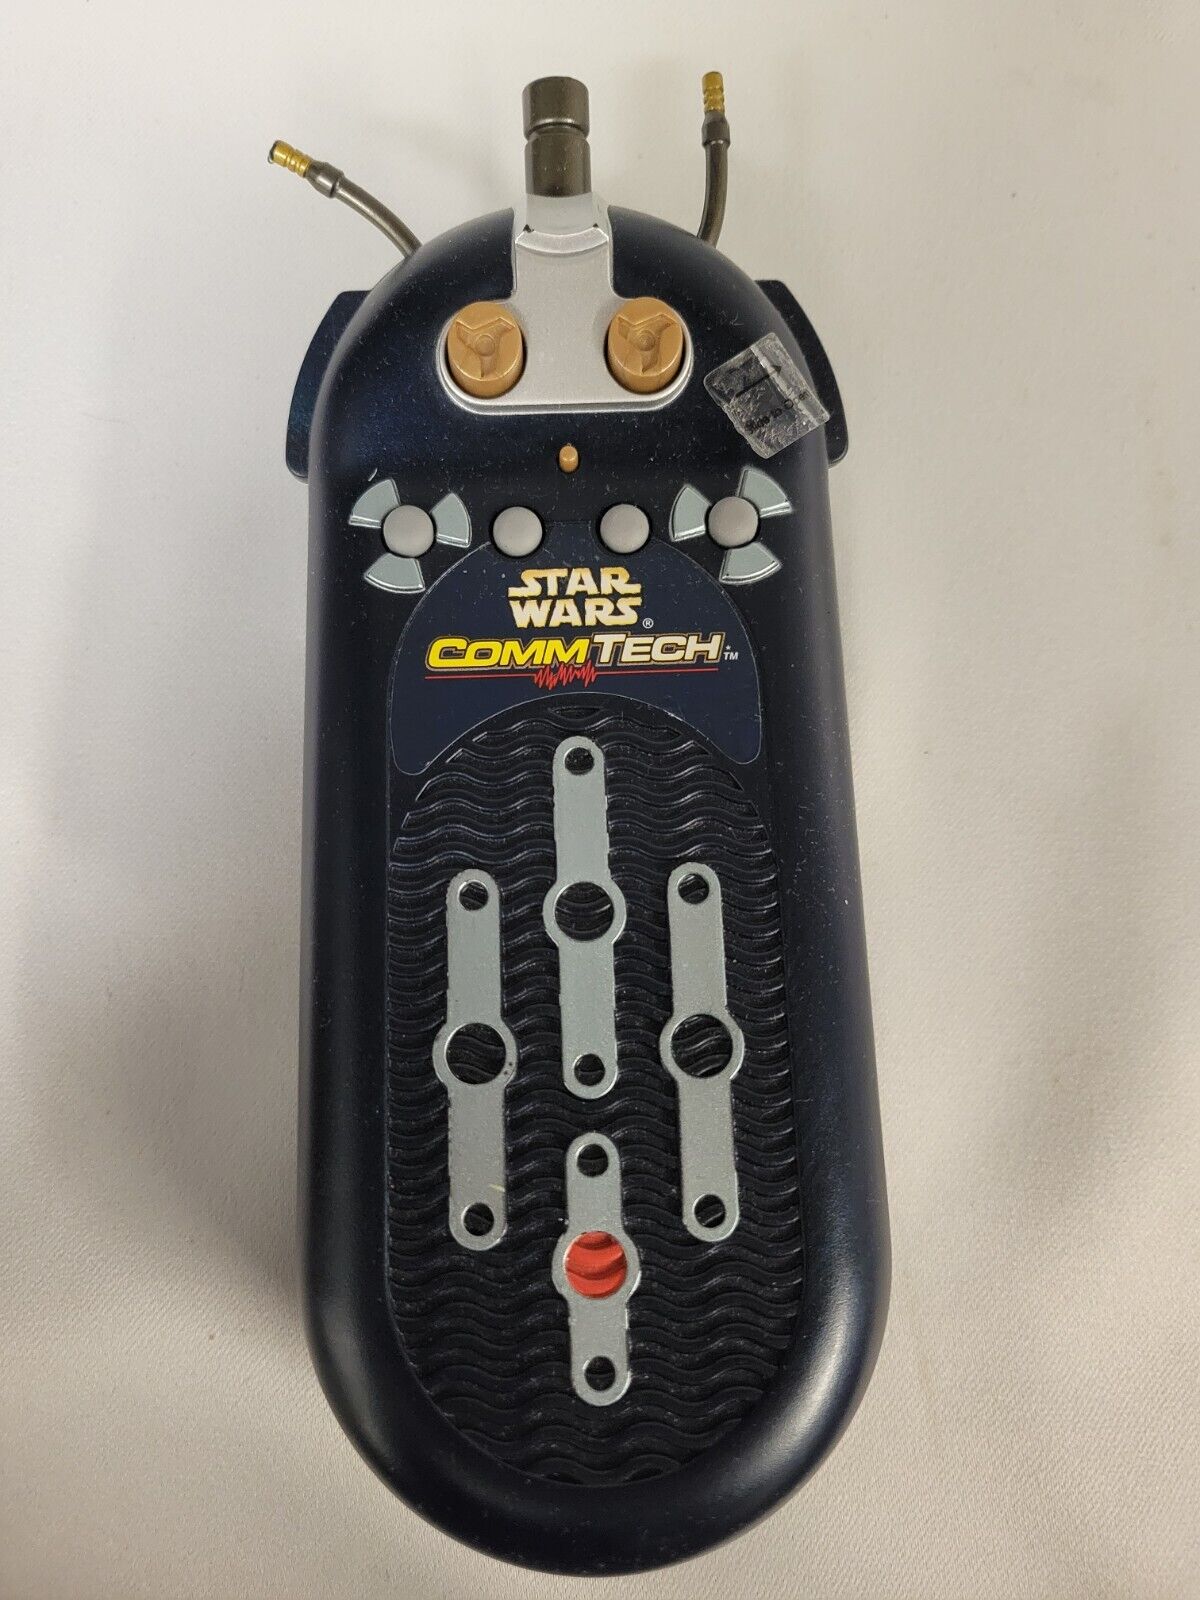 1998 Star Wars CommTech Scanner reader vintage makes sounds when u push buttons